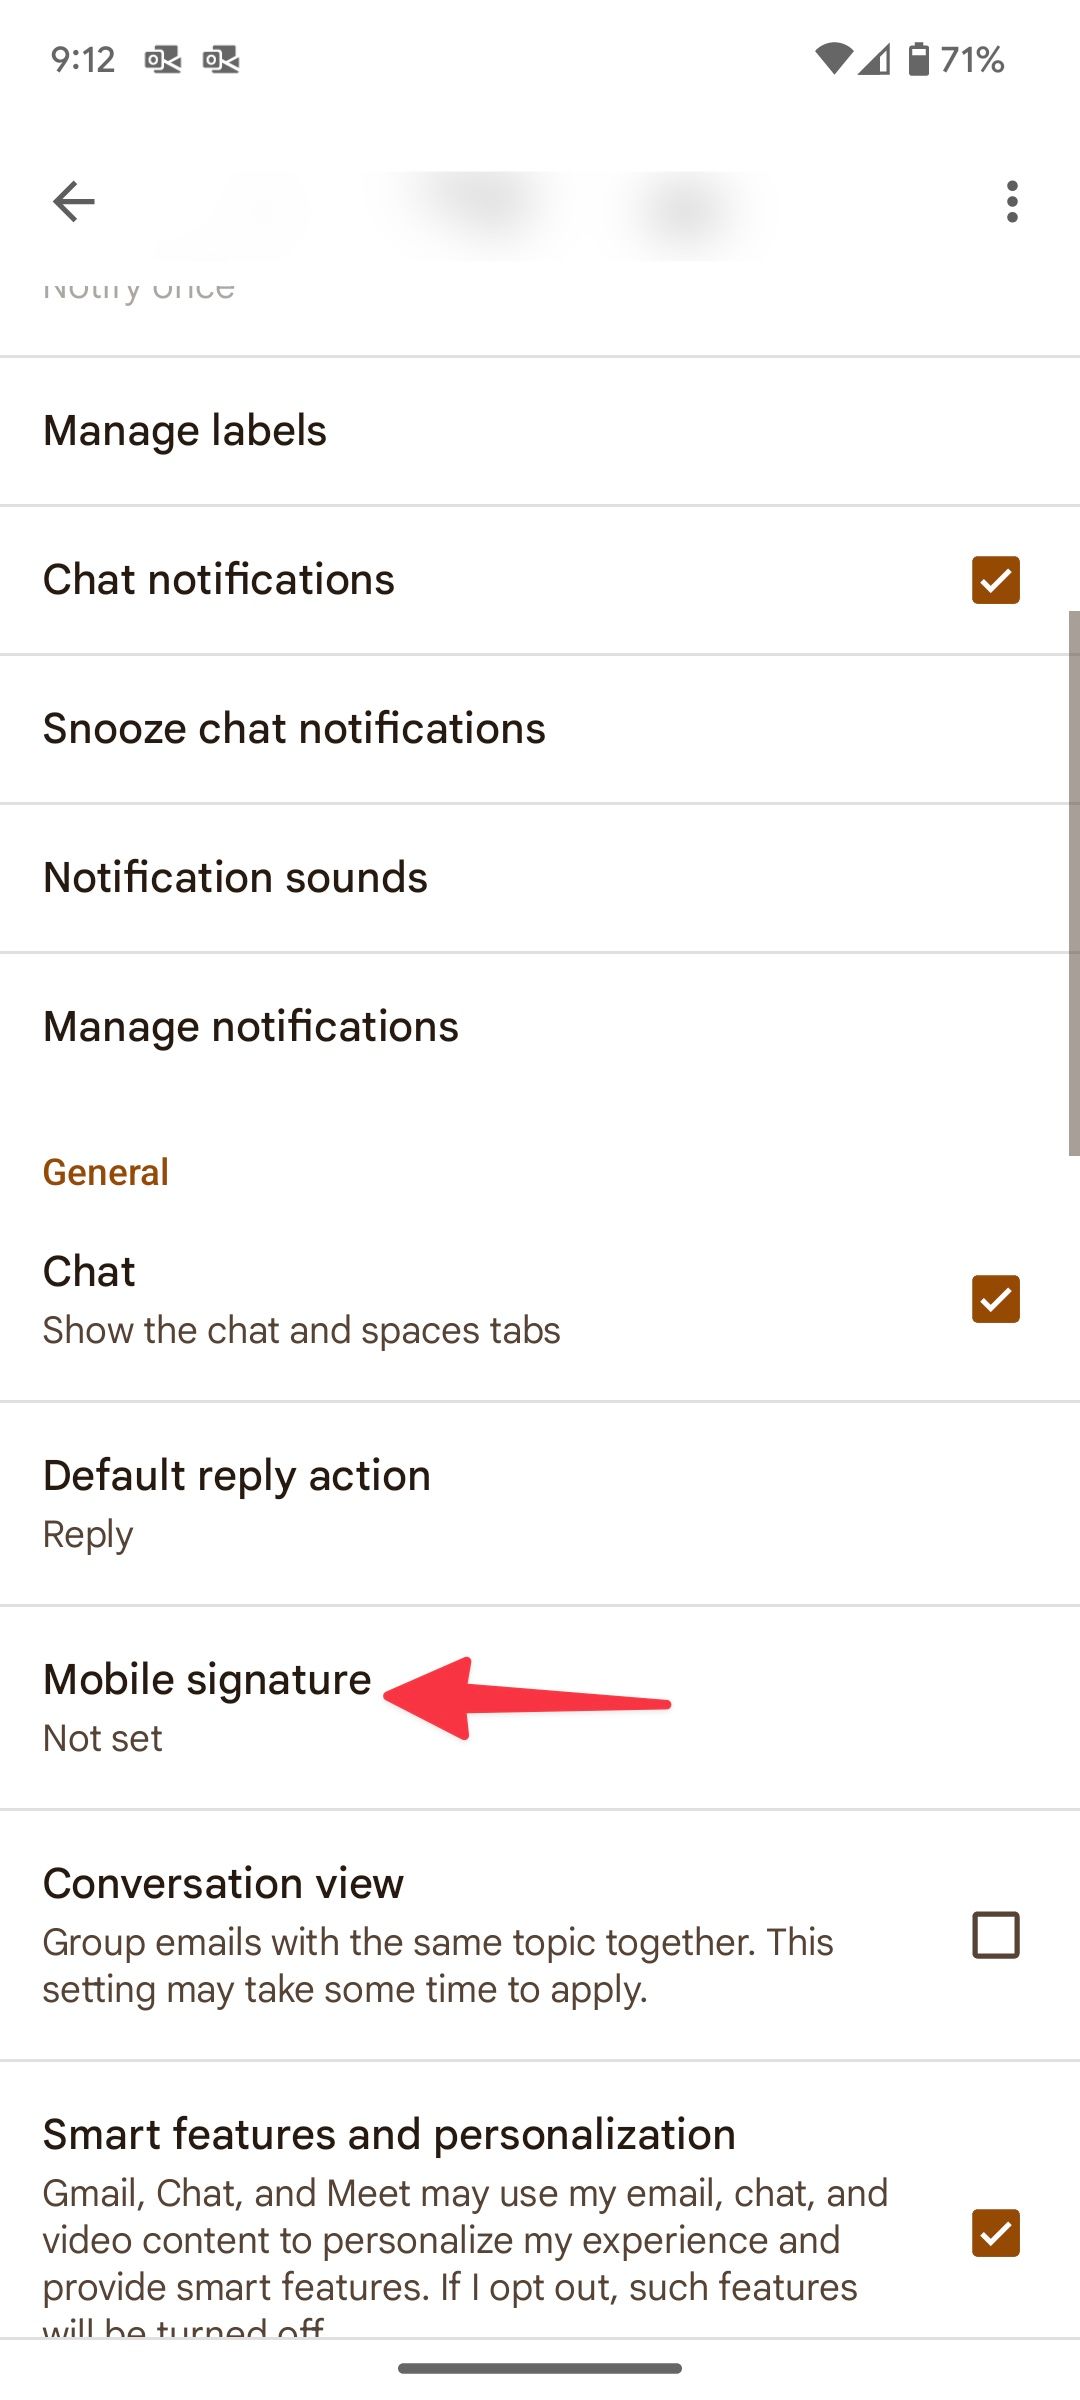 Select 'Mobile signature.'